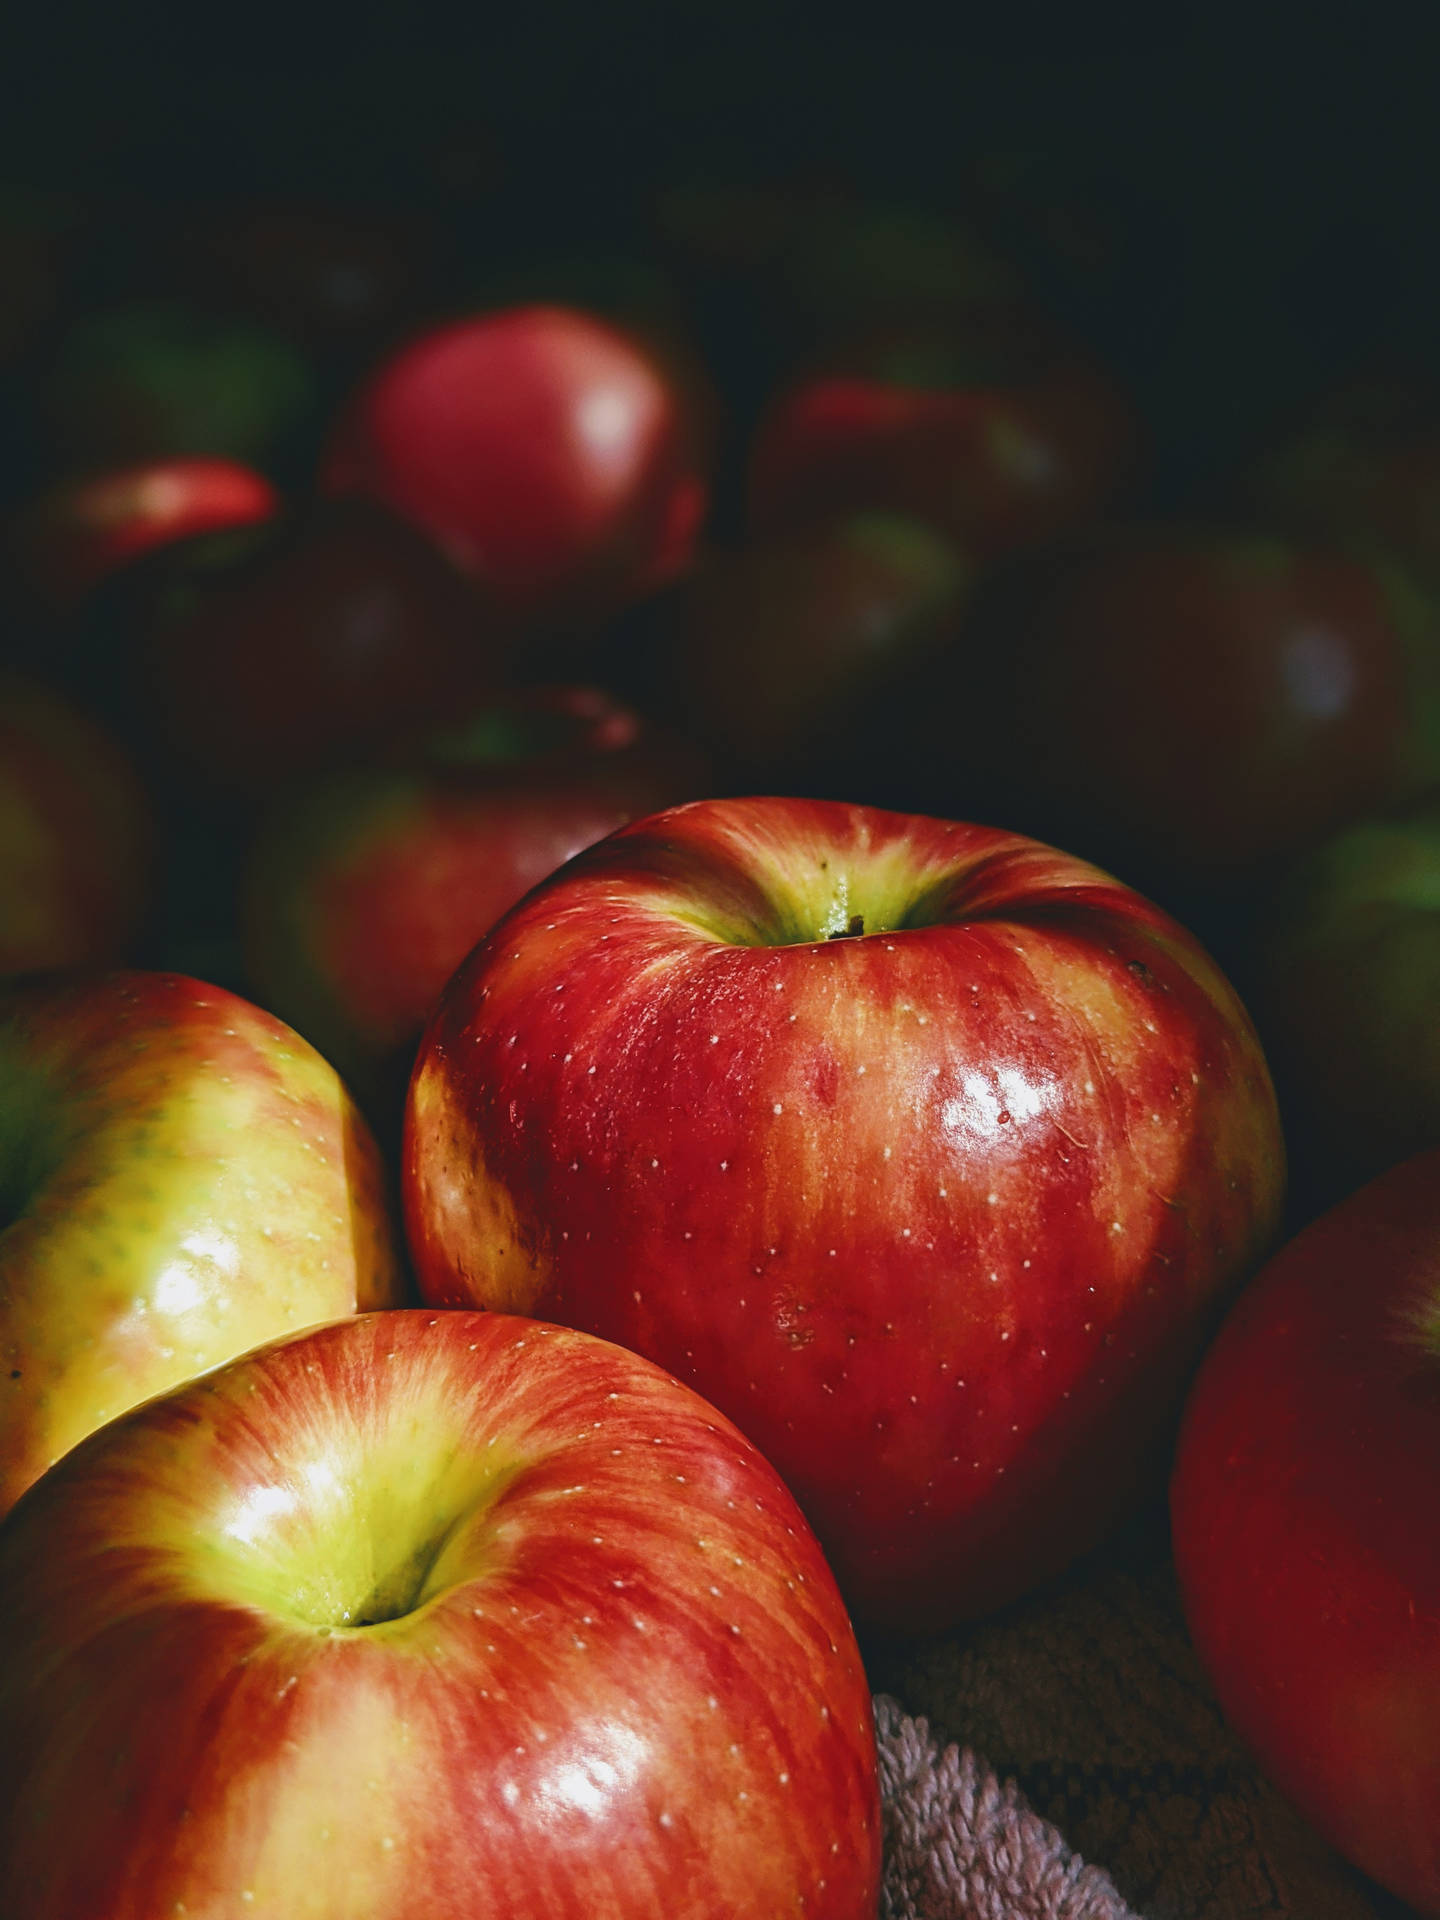 Apple Fruit Waxy Skin Background